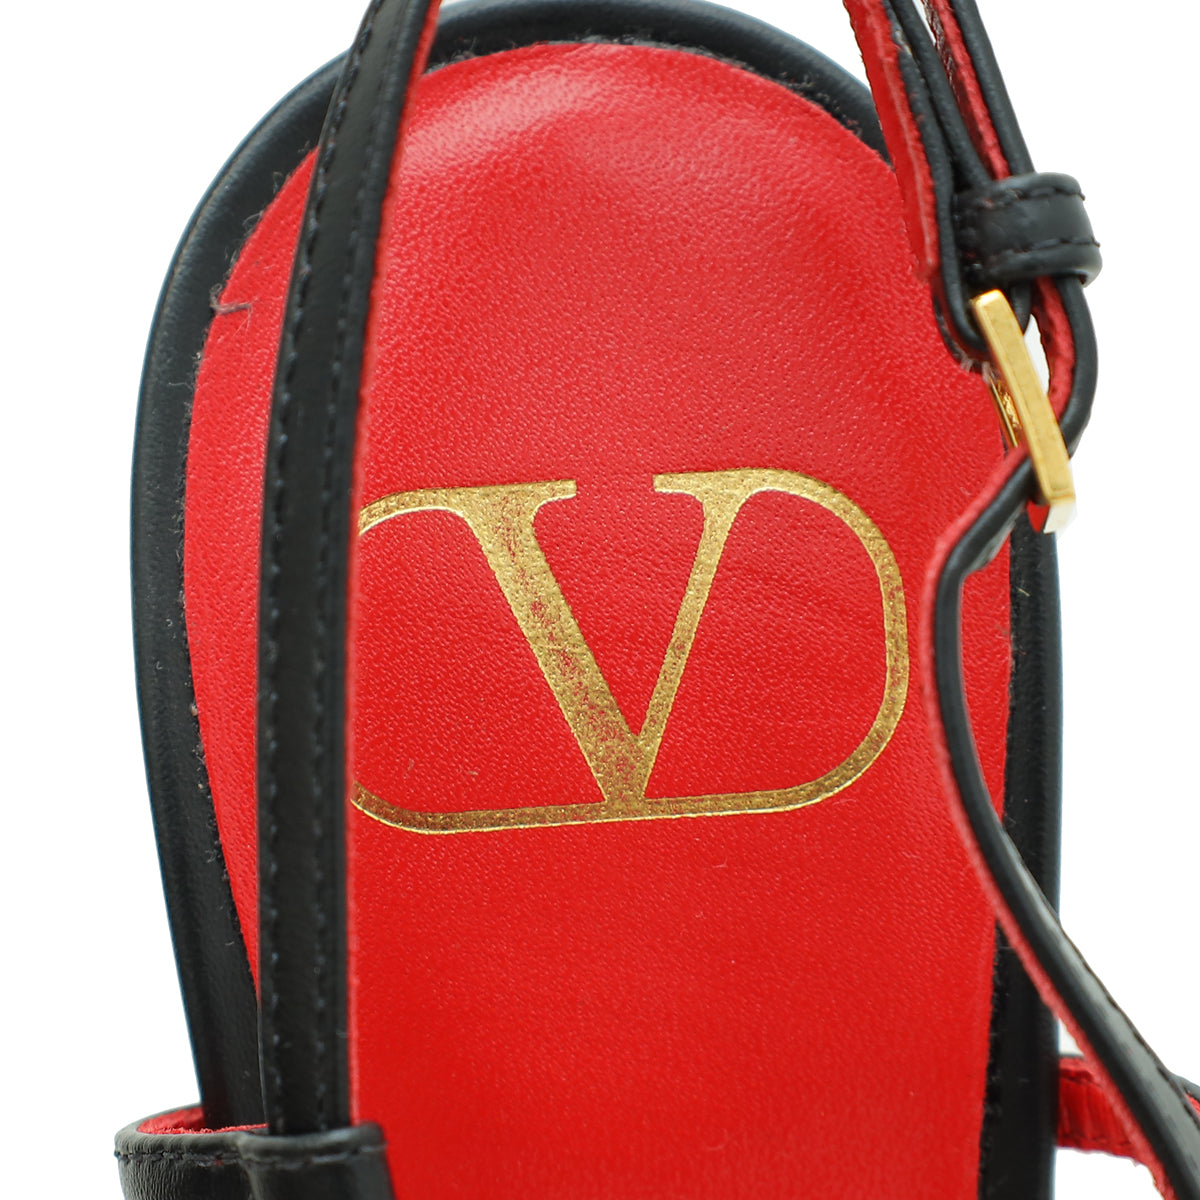 Valentino Black Vlogo Platform Slingback Pump 38.5